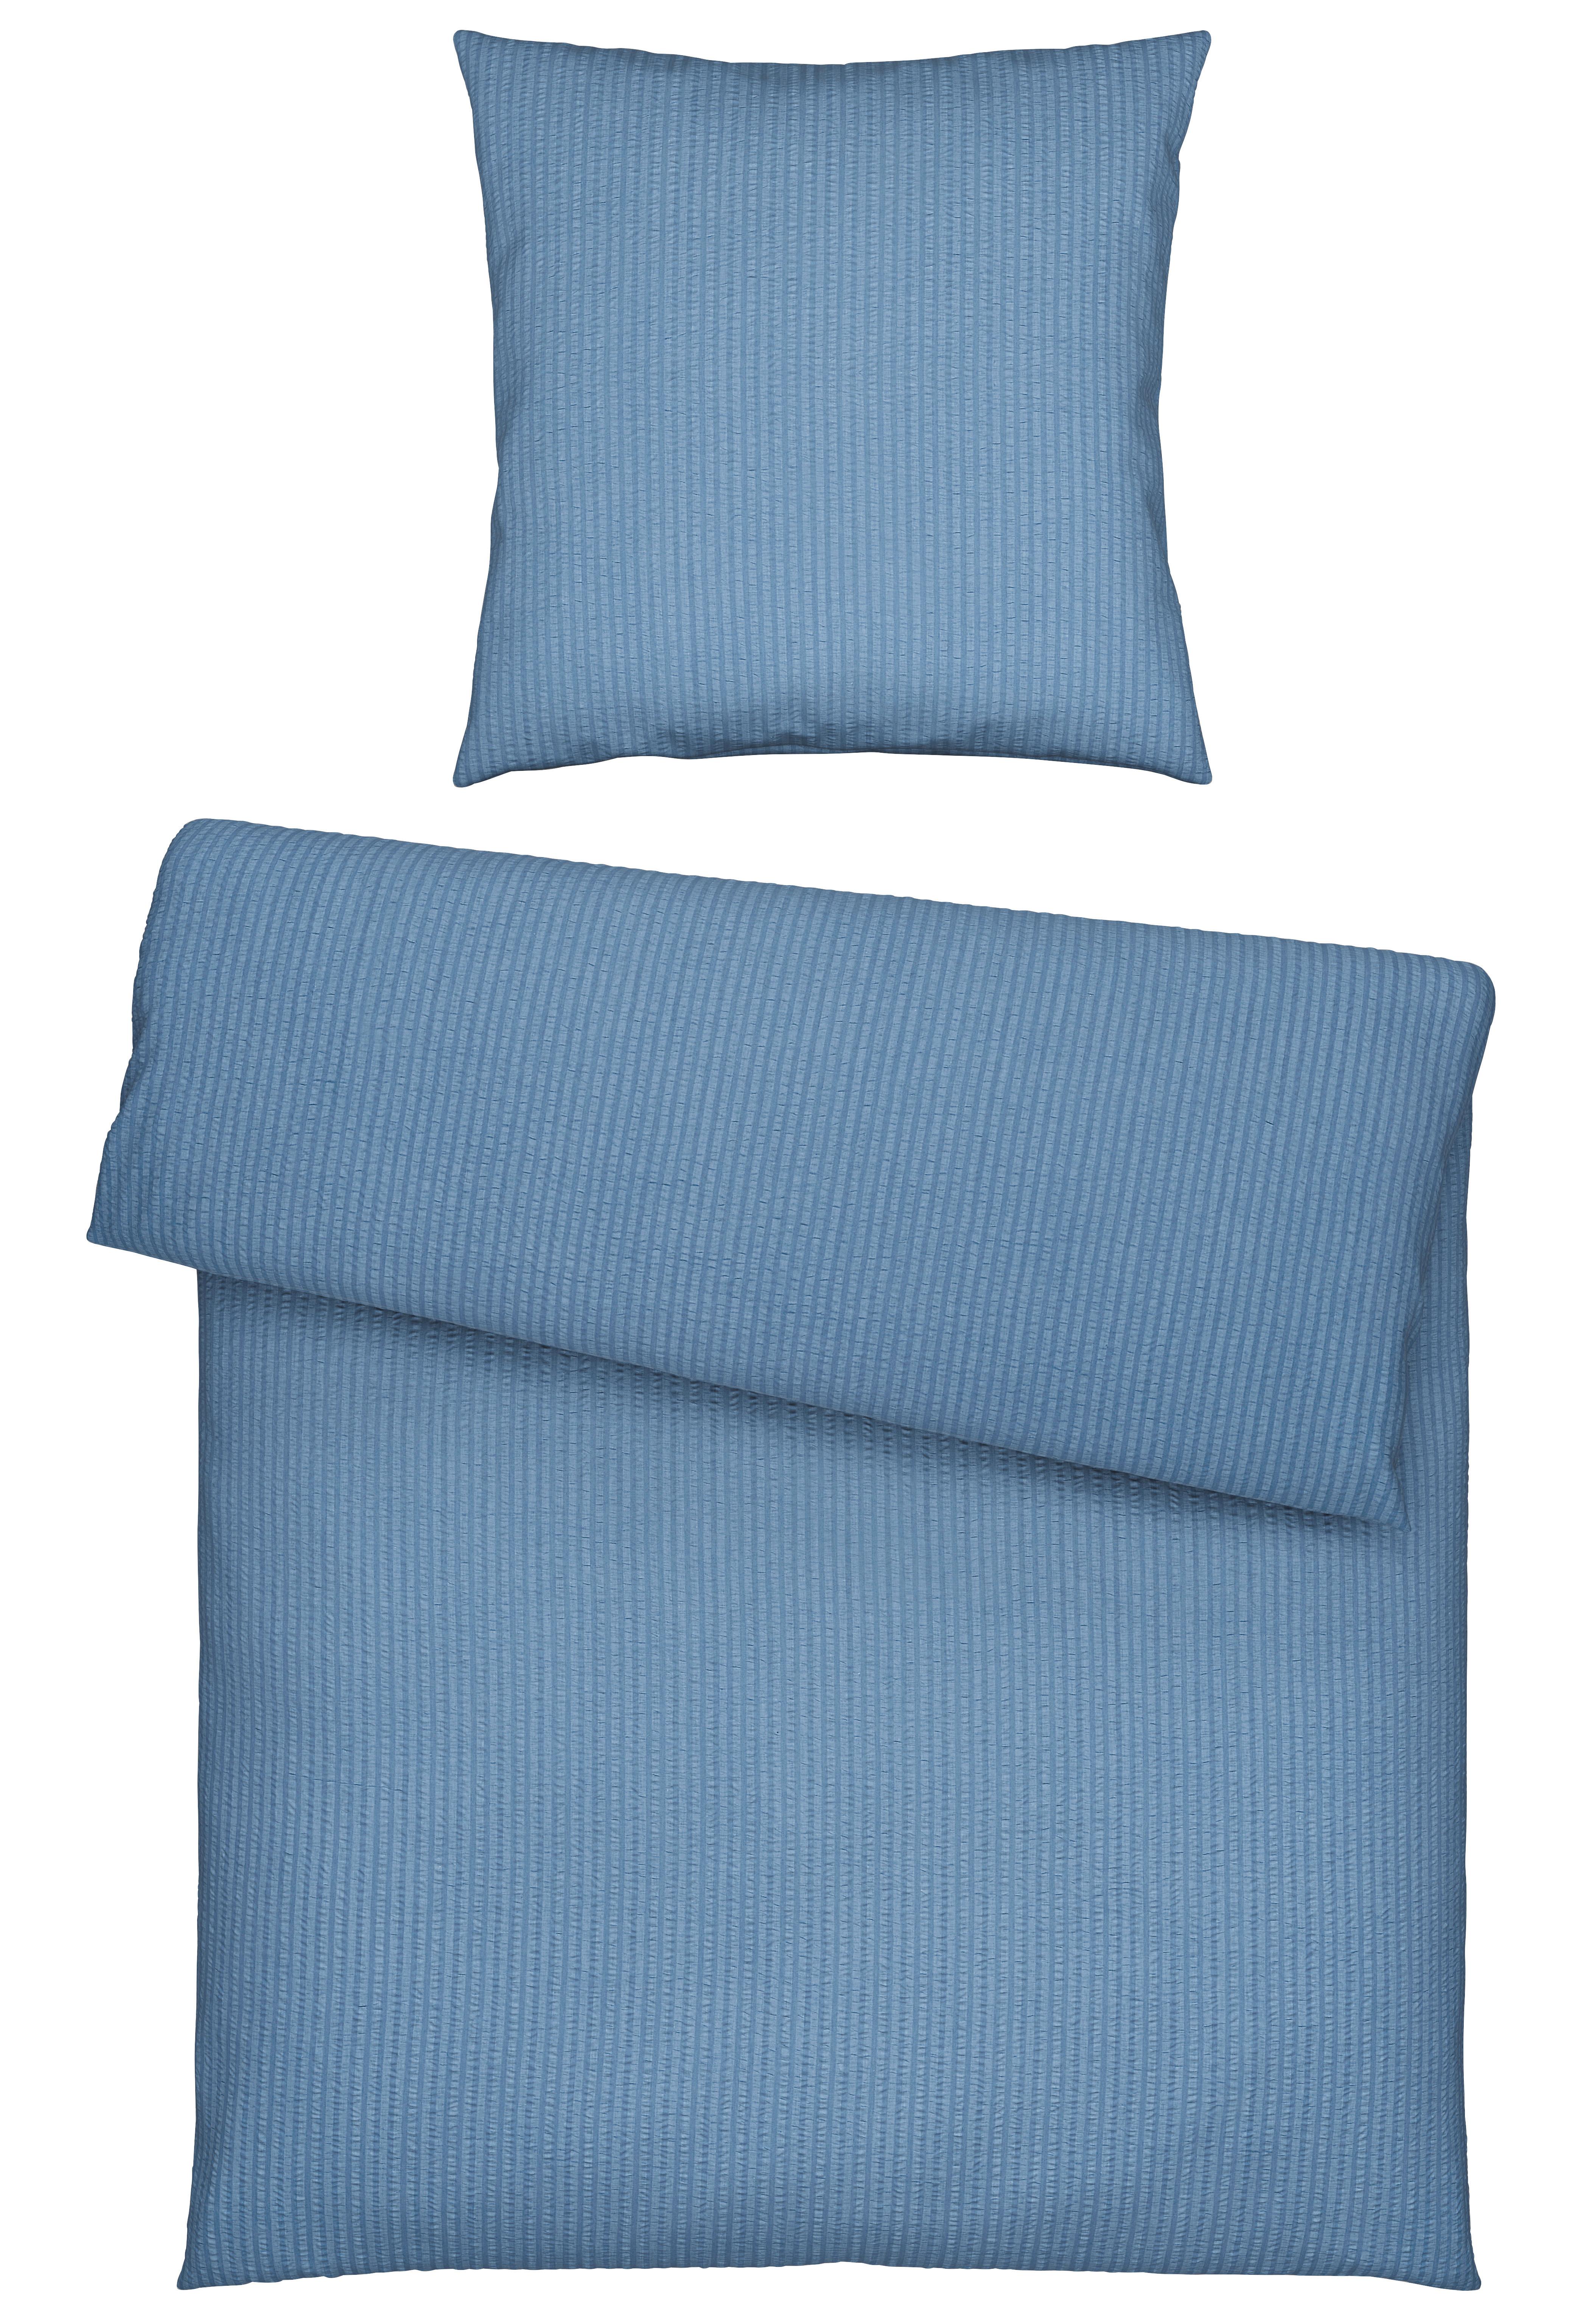 Bettwäsche Babs in Blau ca. 135x200cm - Blau, MODERN, Textil (135/200cm) - Modern Living